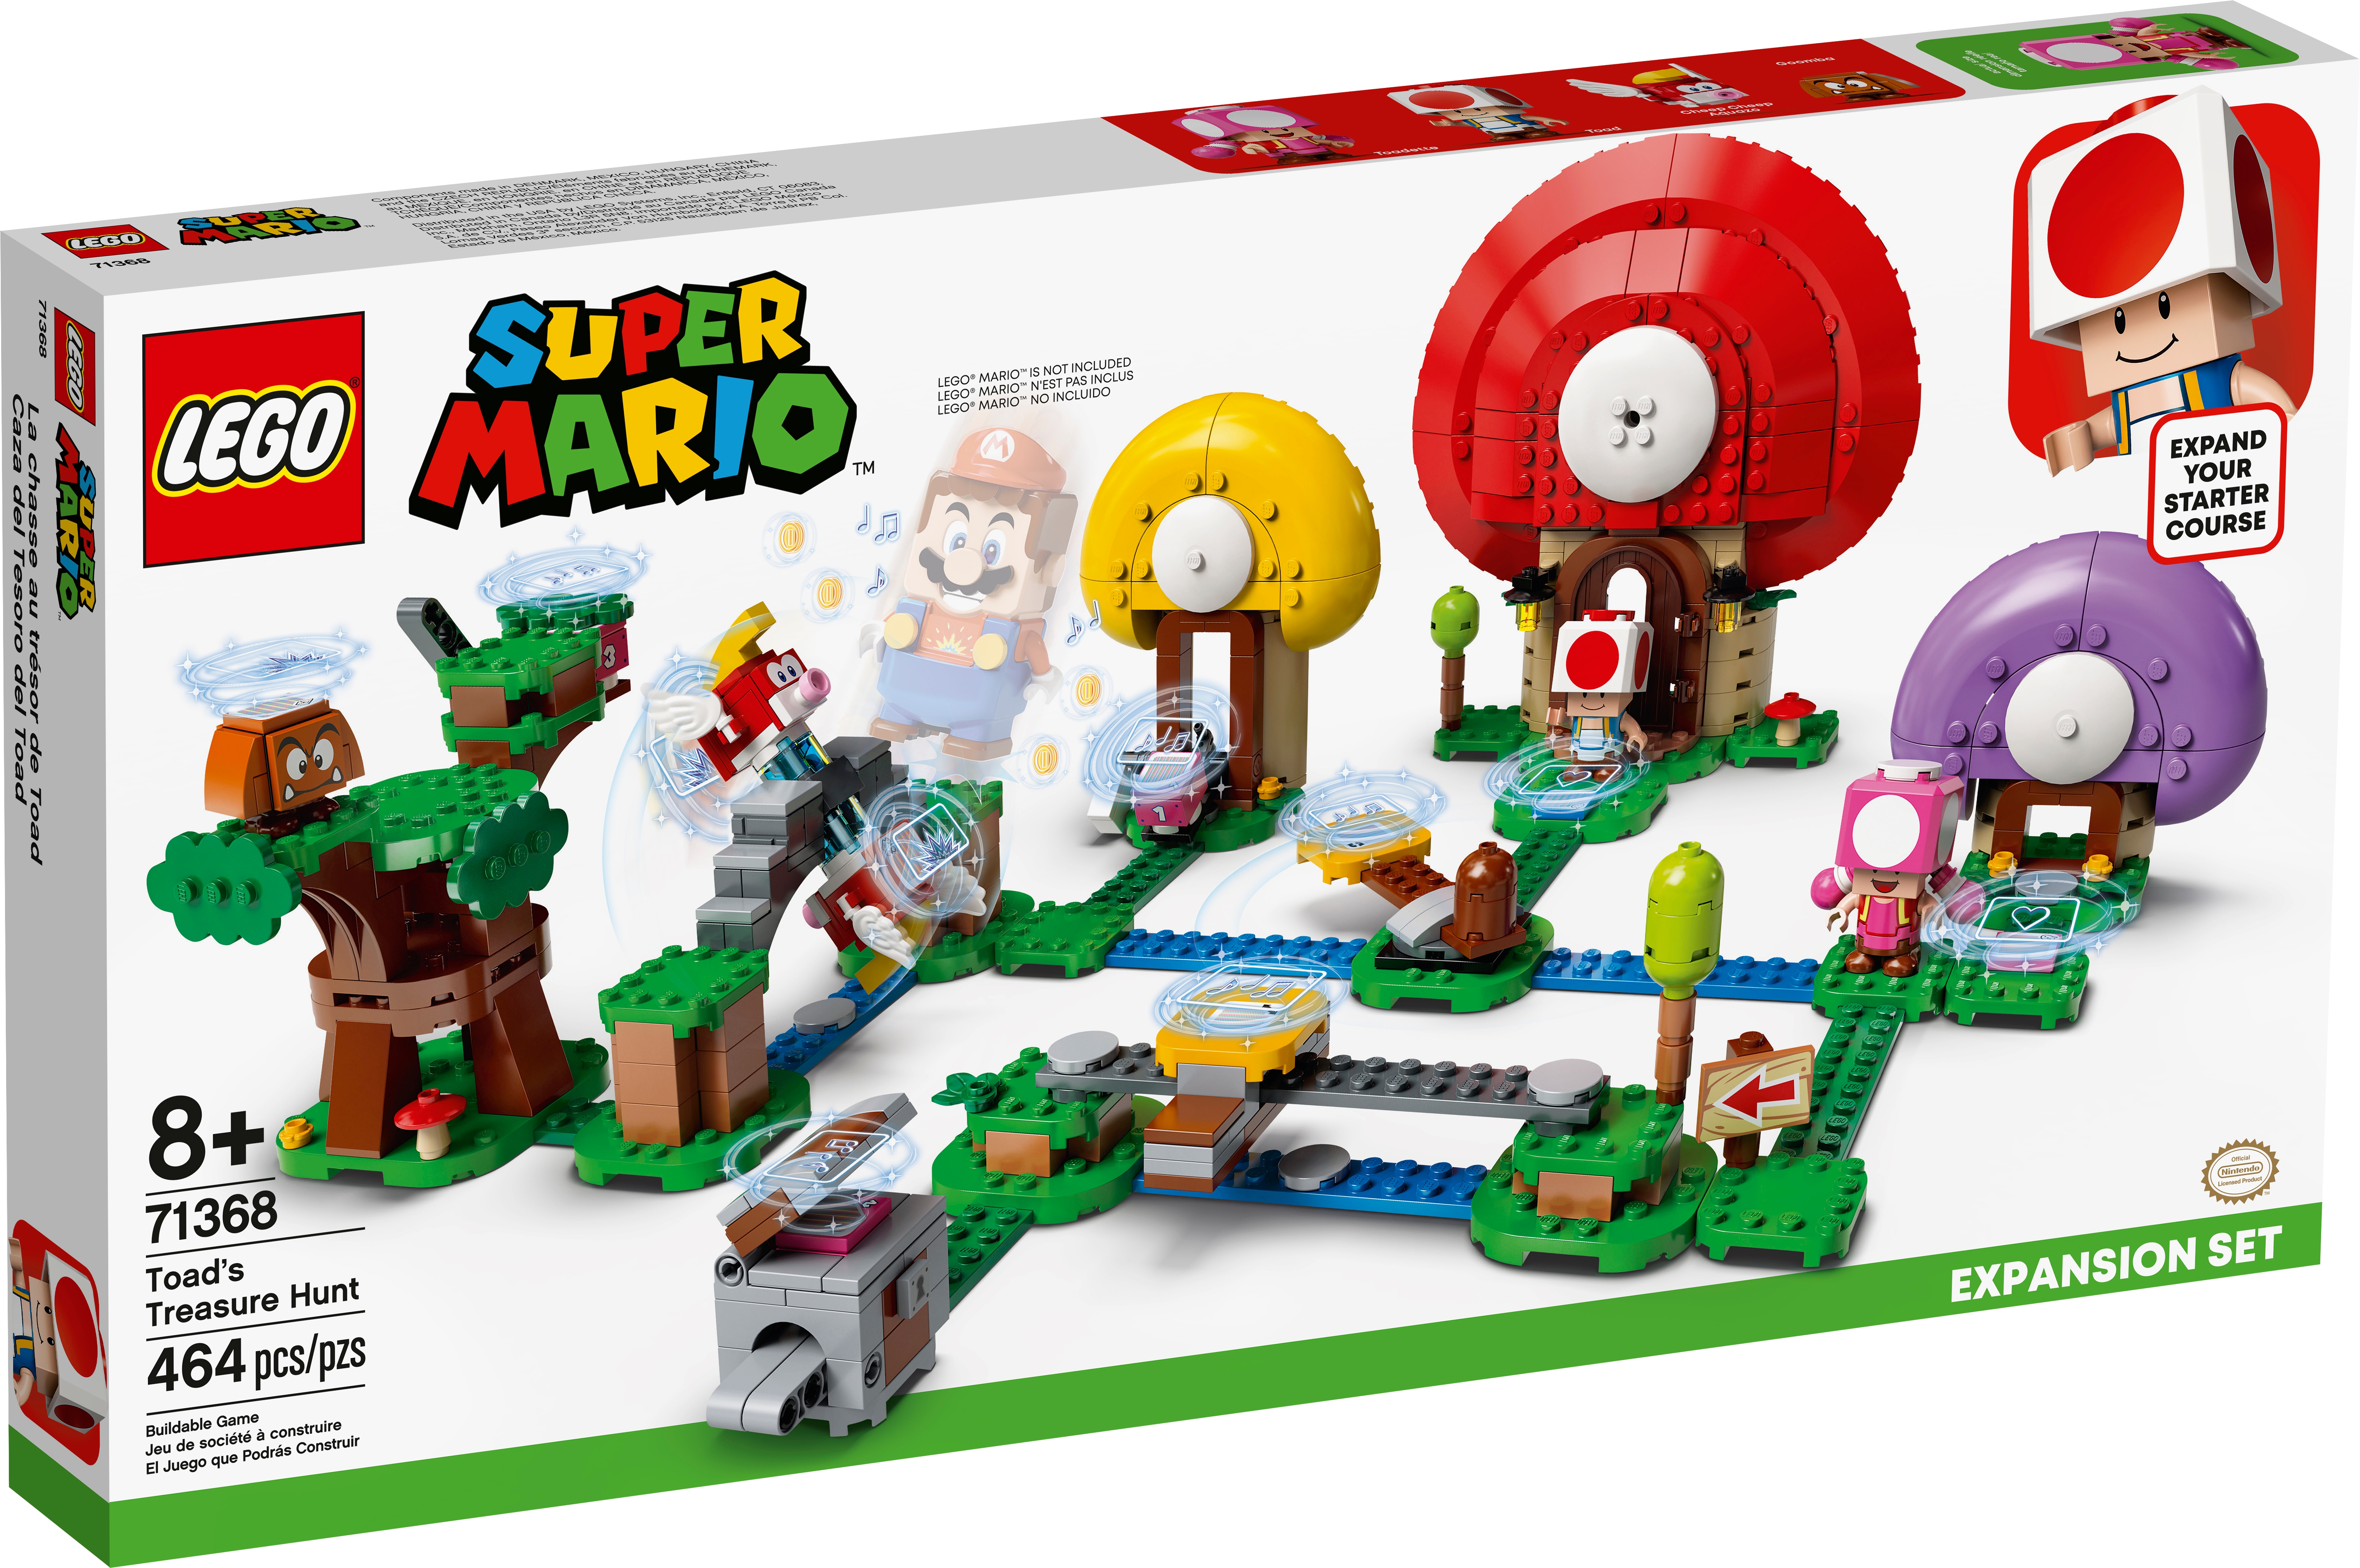 Toad S Treasure Hunt Expansion Set Lego Super Mario Buy Online At The Official Lego Shop De